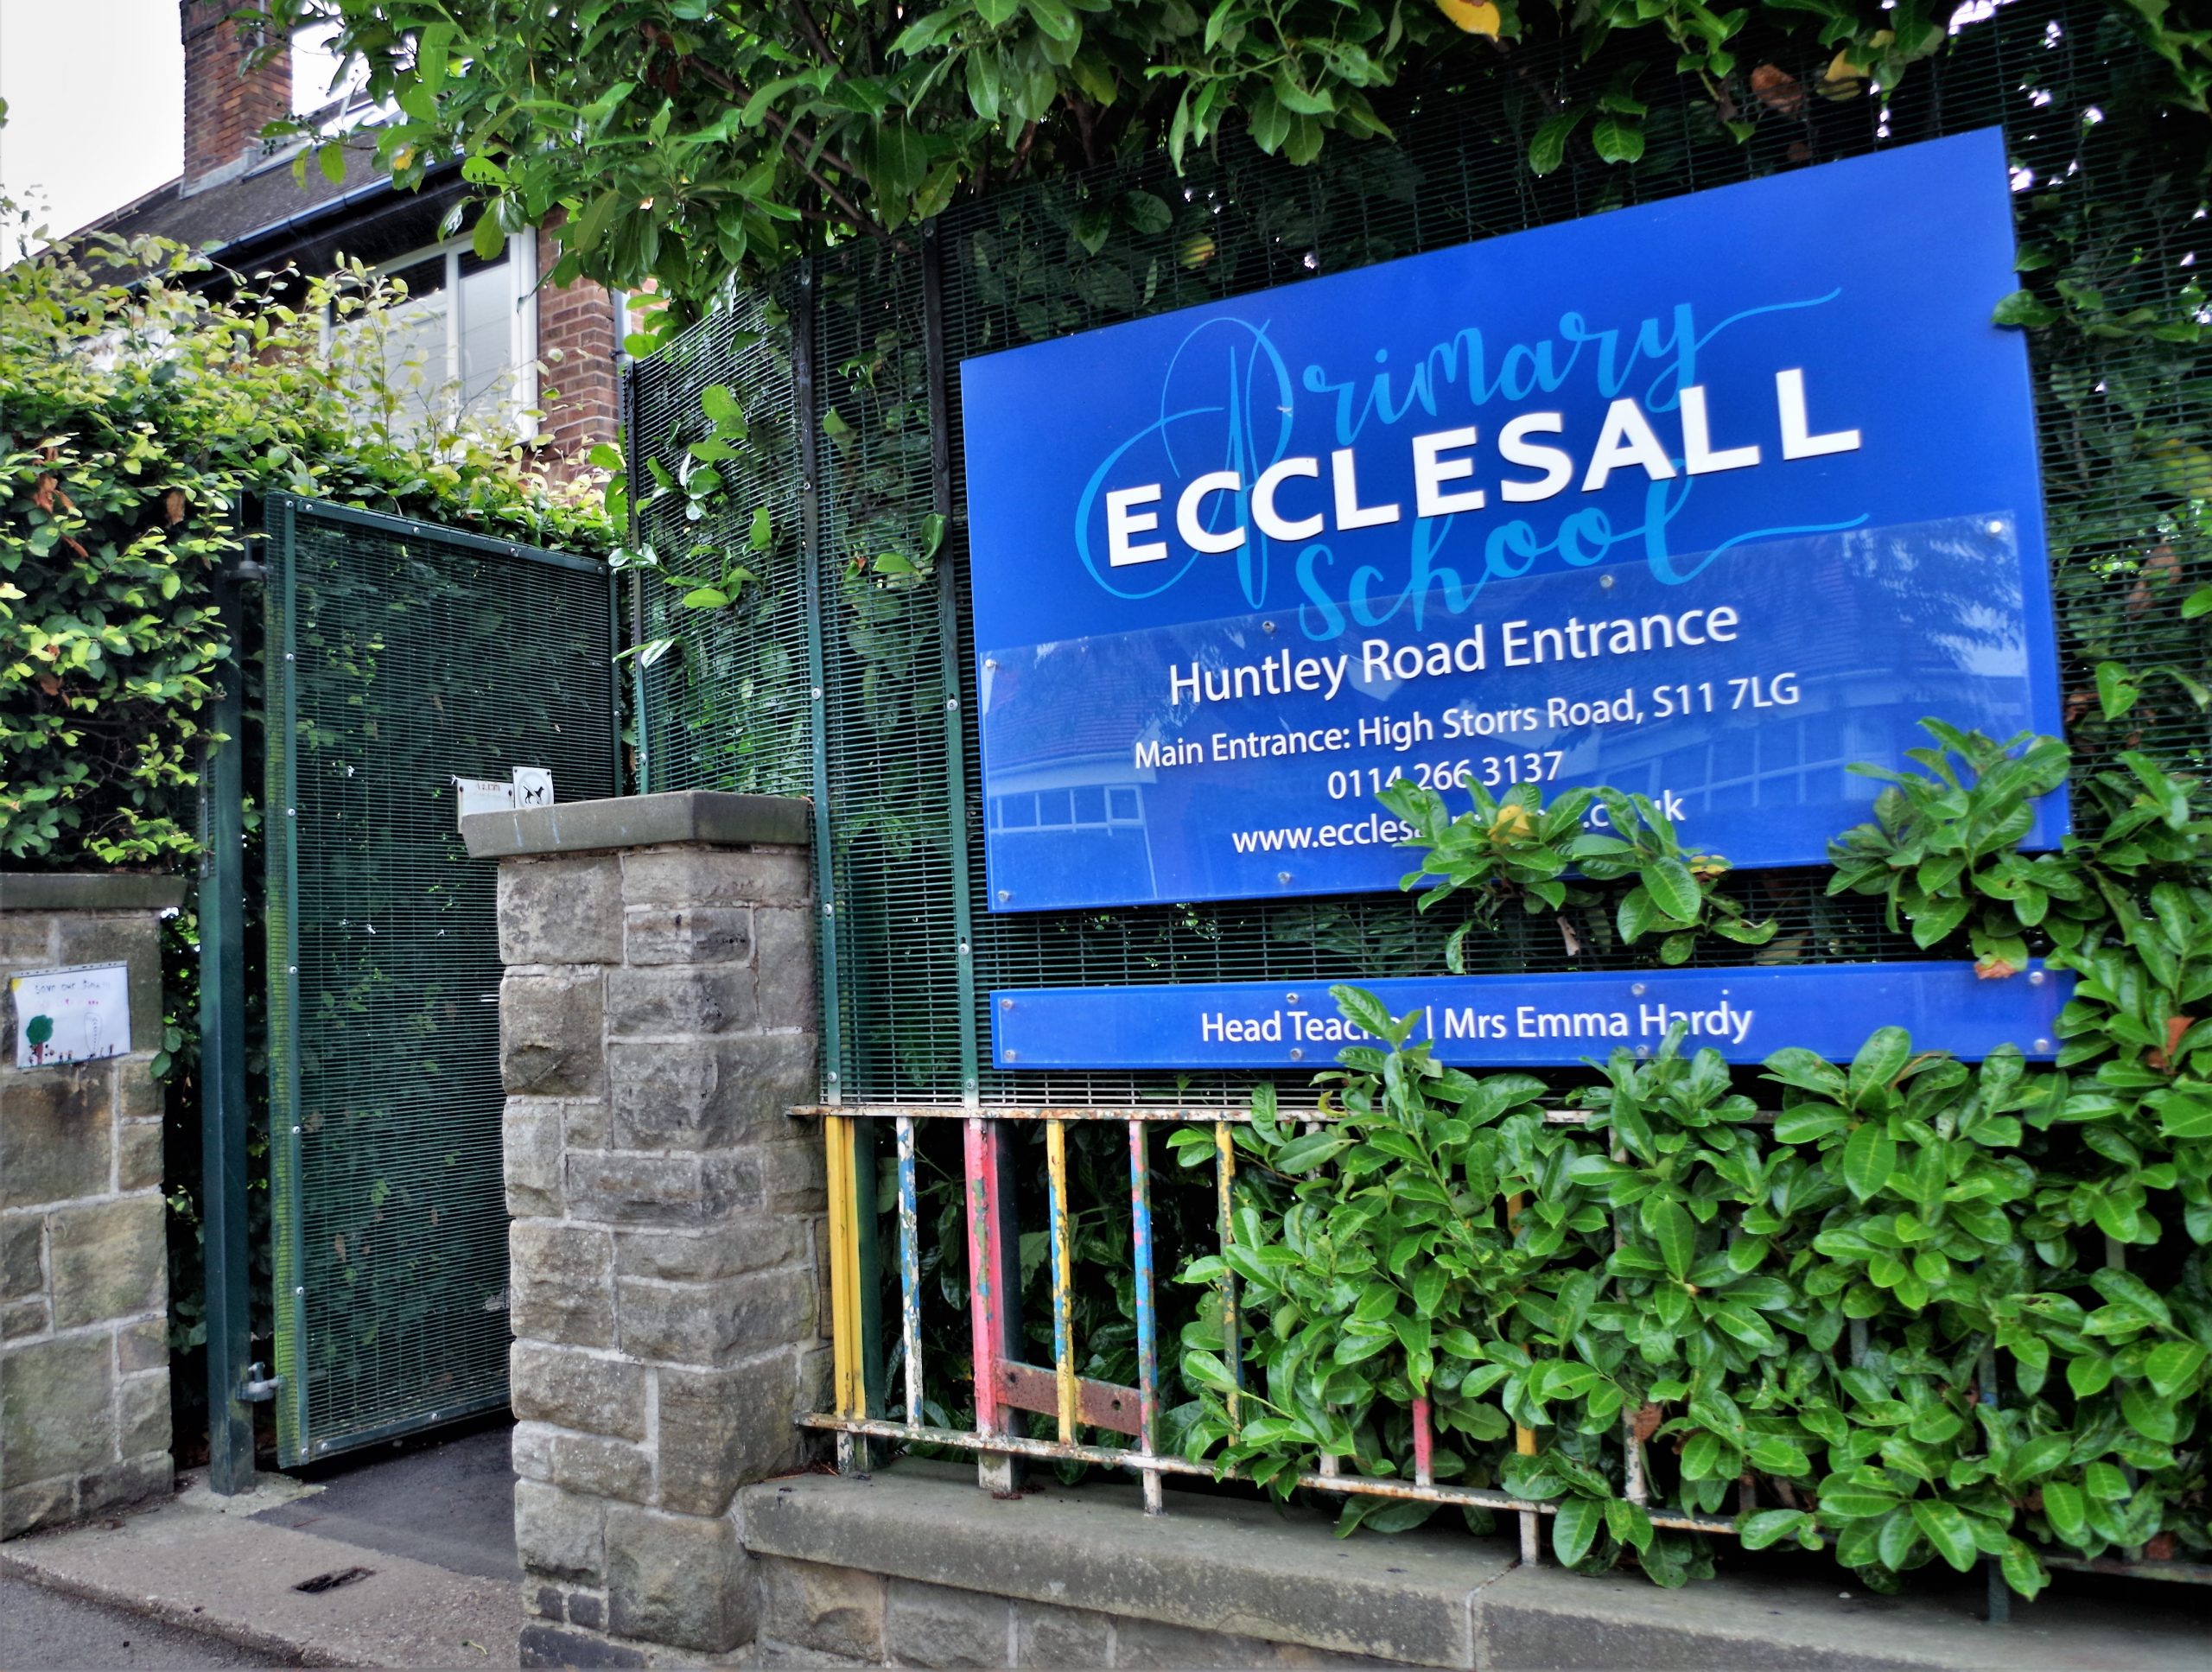 Ecclesall Primary School welcome sign.